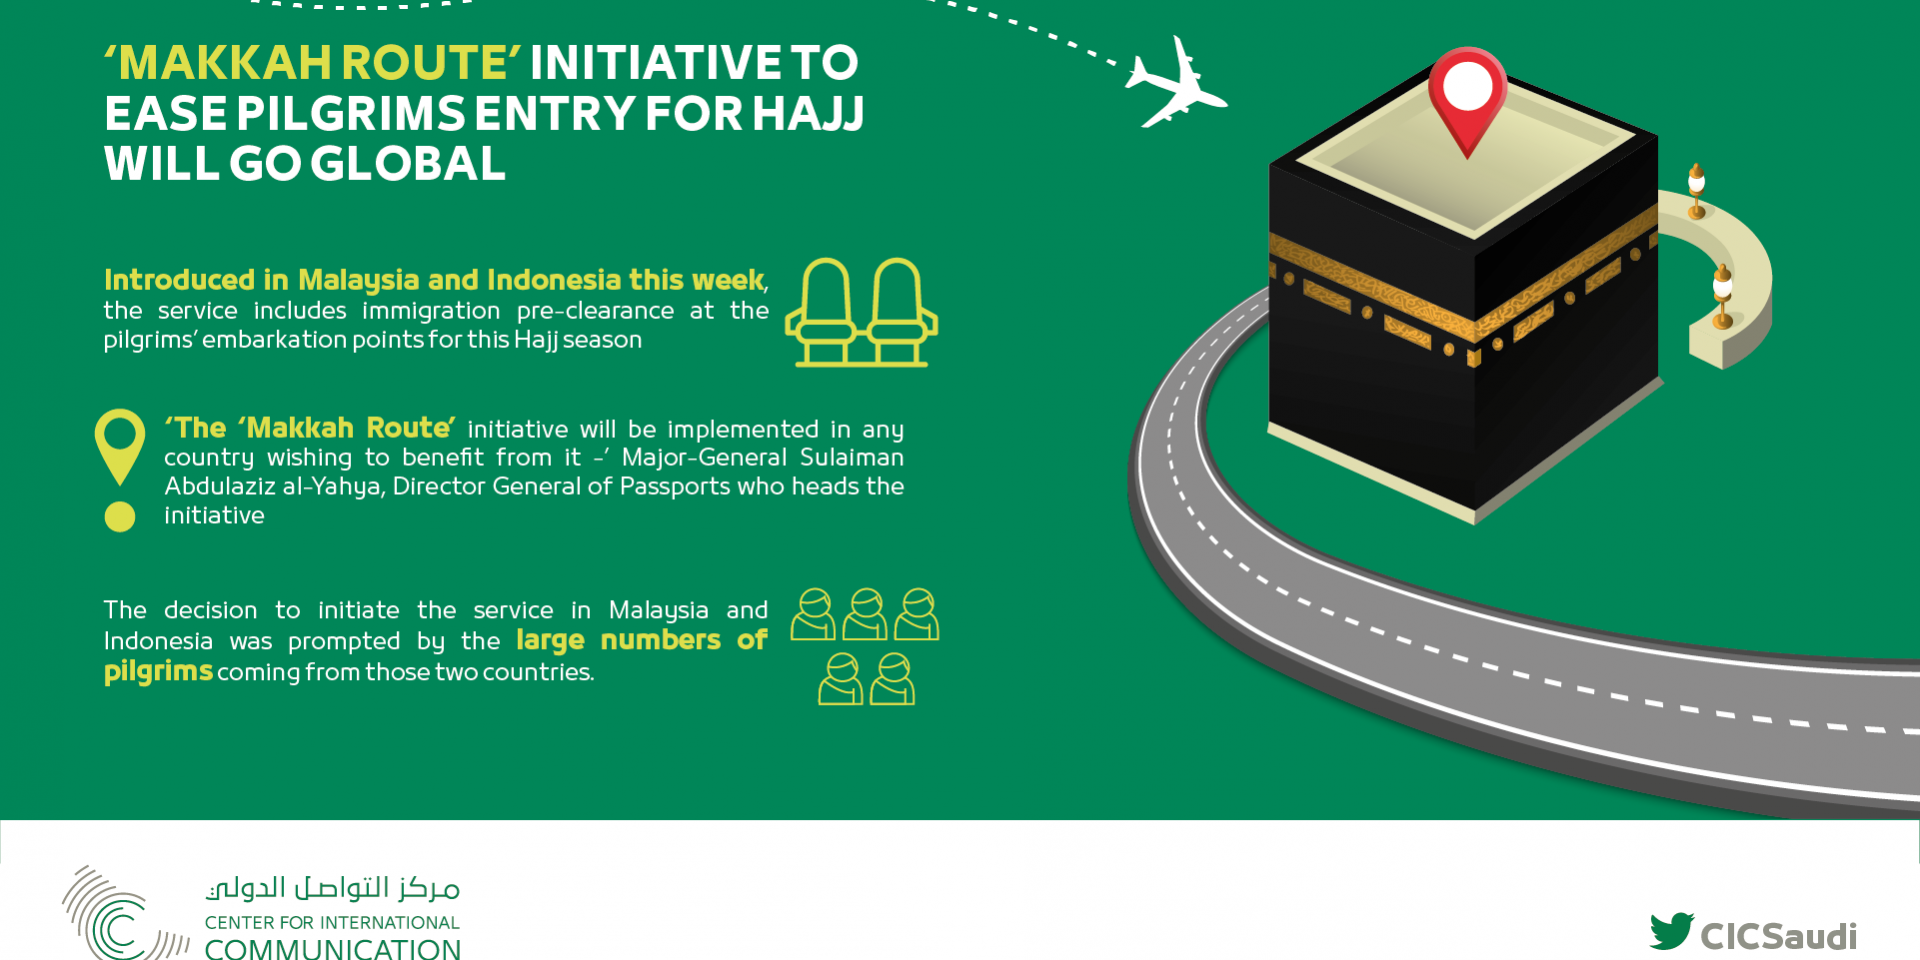 MakkahRoad Infographic1920x960 1 - Saudi Arabia launches ‘Makkah Road’ initiative for pilgrims